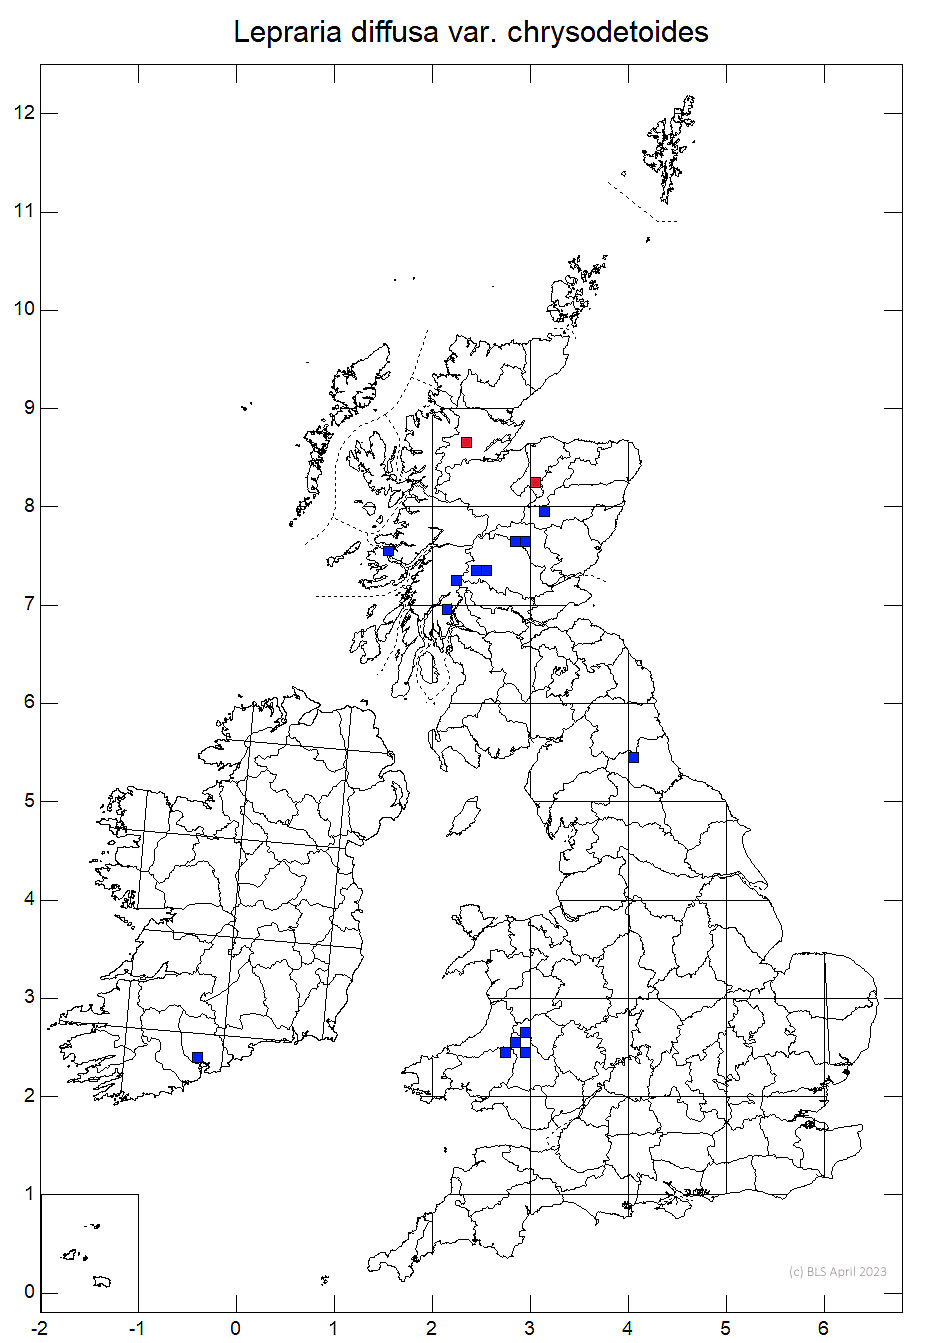 Lepraria diffusa var. chrysodetoides 10km sq distribution map